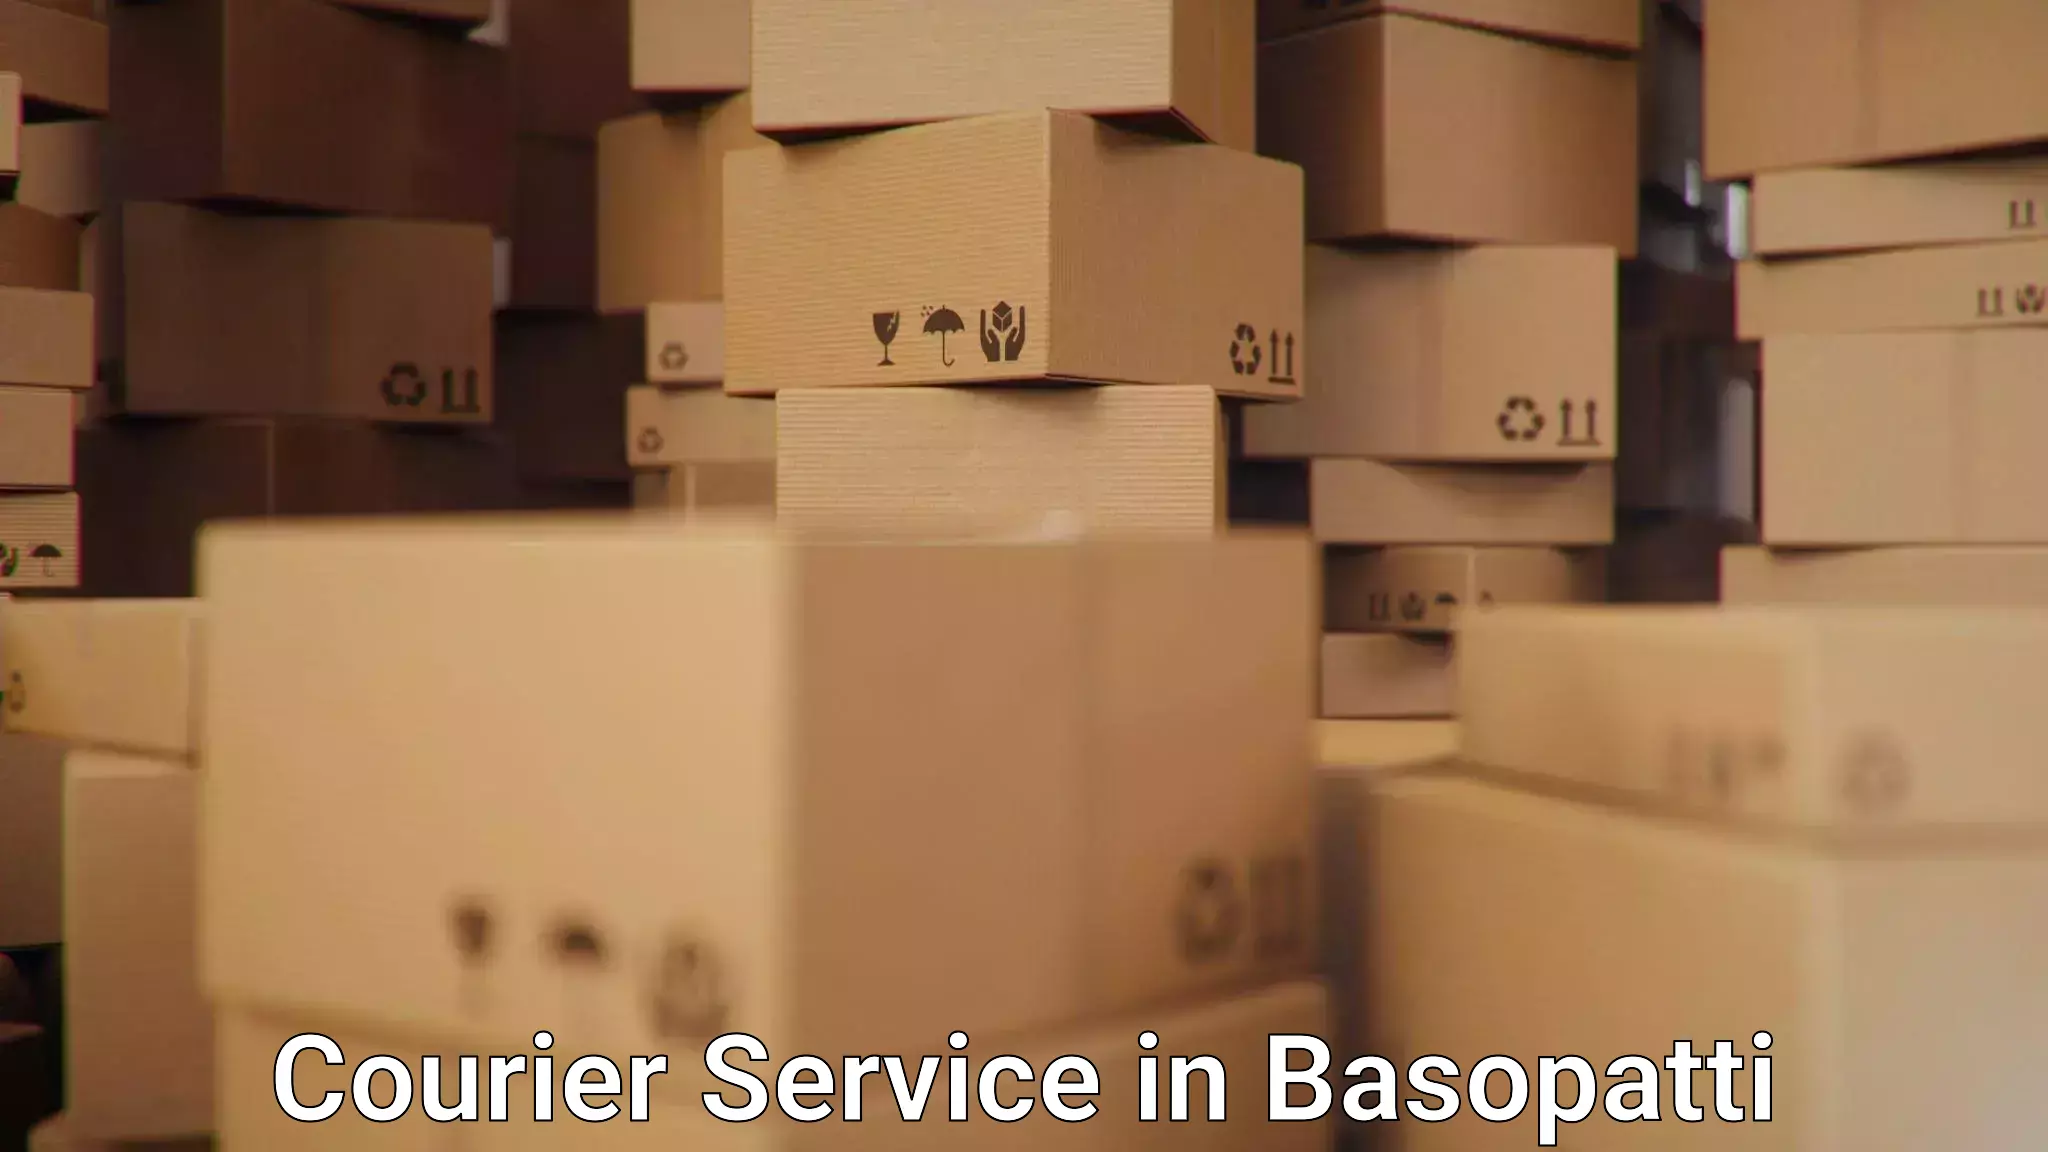 Efficient logistics management in Basopatti